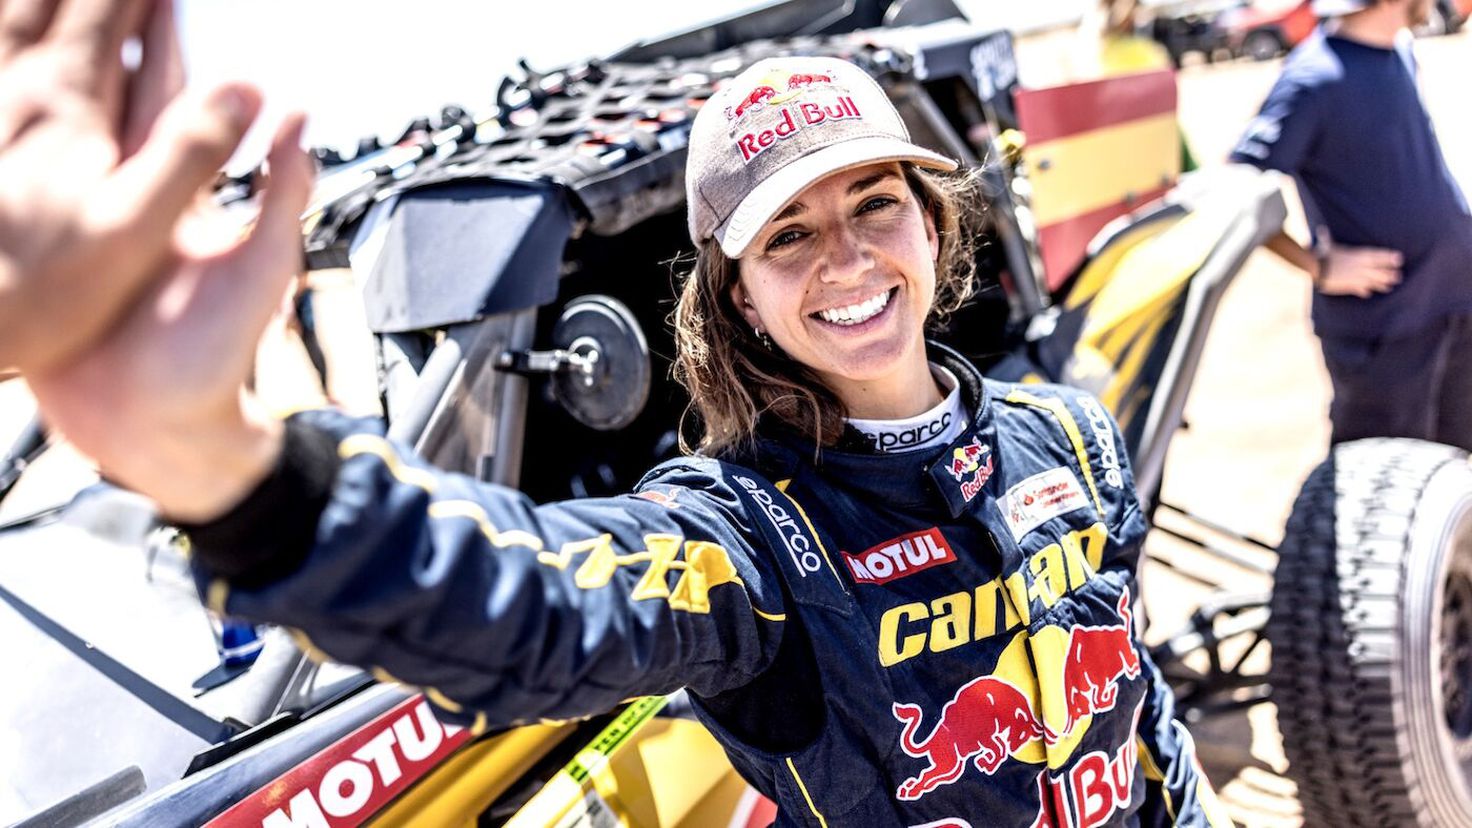 Cristina Gutiérrez will meet again with Sebastien Loeb in World Rallycross
